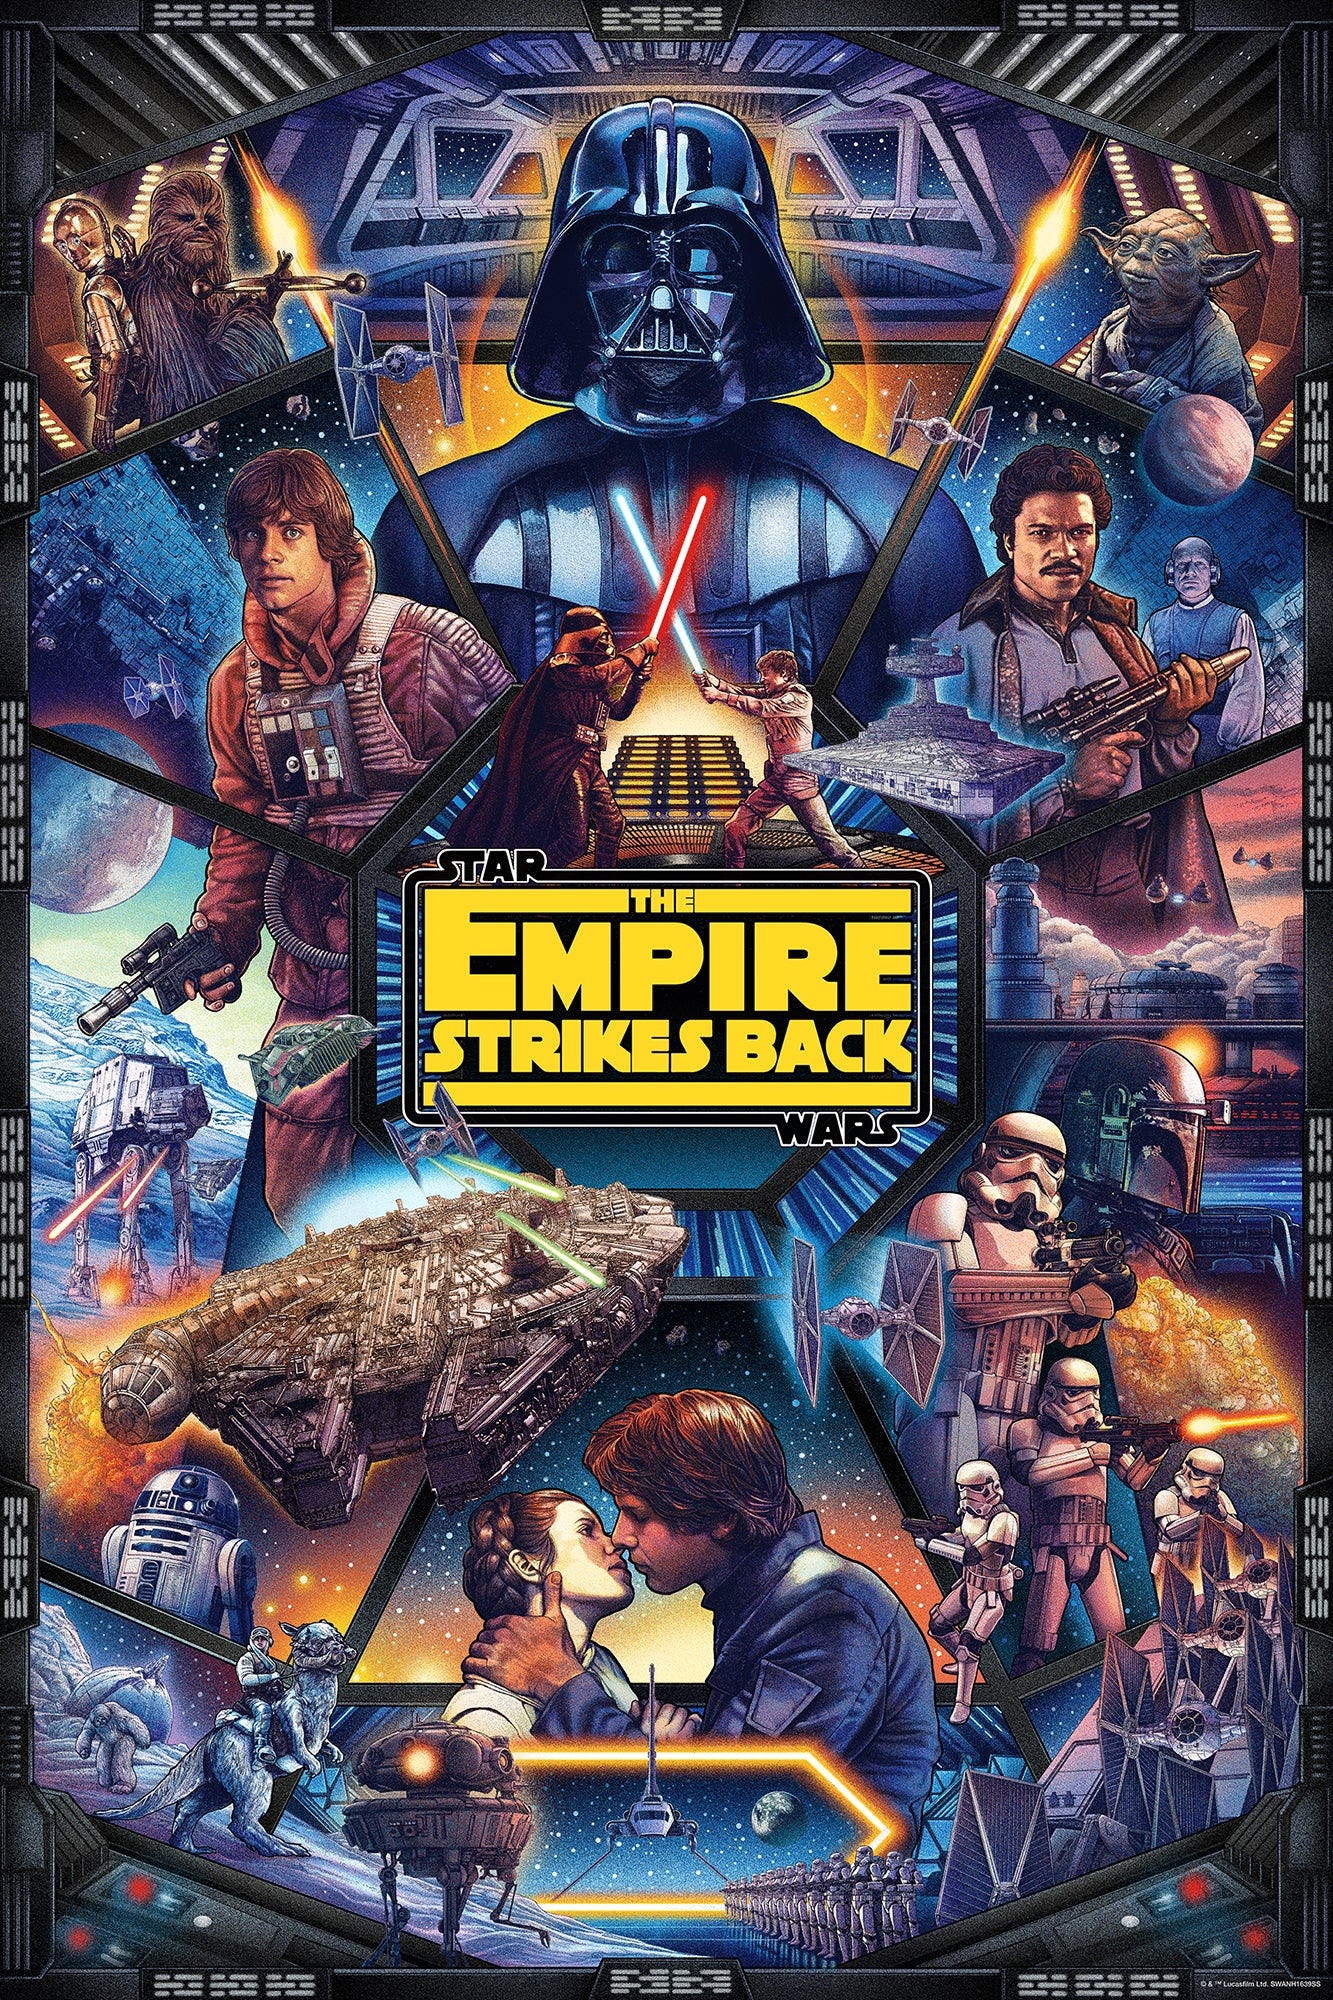 Star Wars: Empire Strikes Back Original 70mm Film Cell In Original Sealed  Package